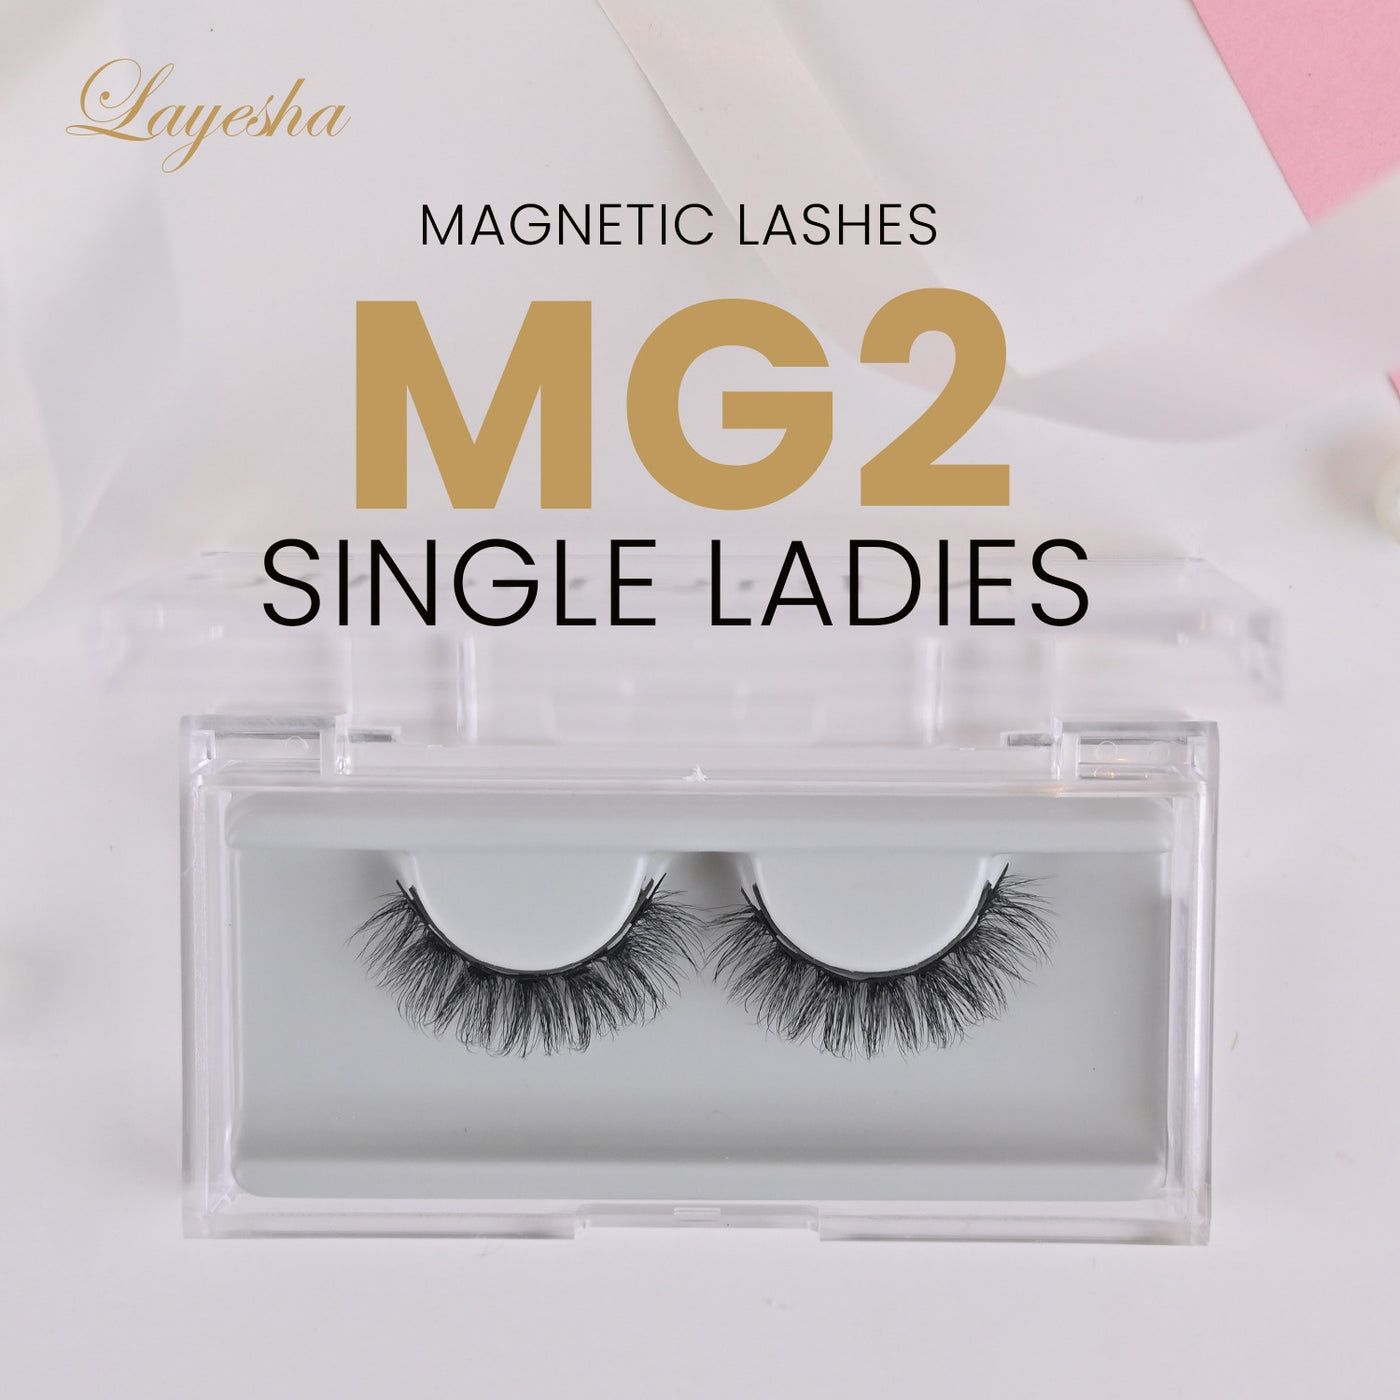 MG 2 SINGLE LADIES (Magnetic Lashes)